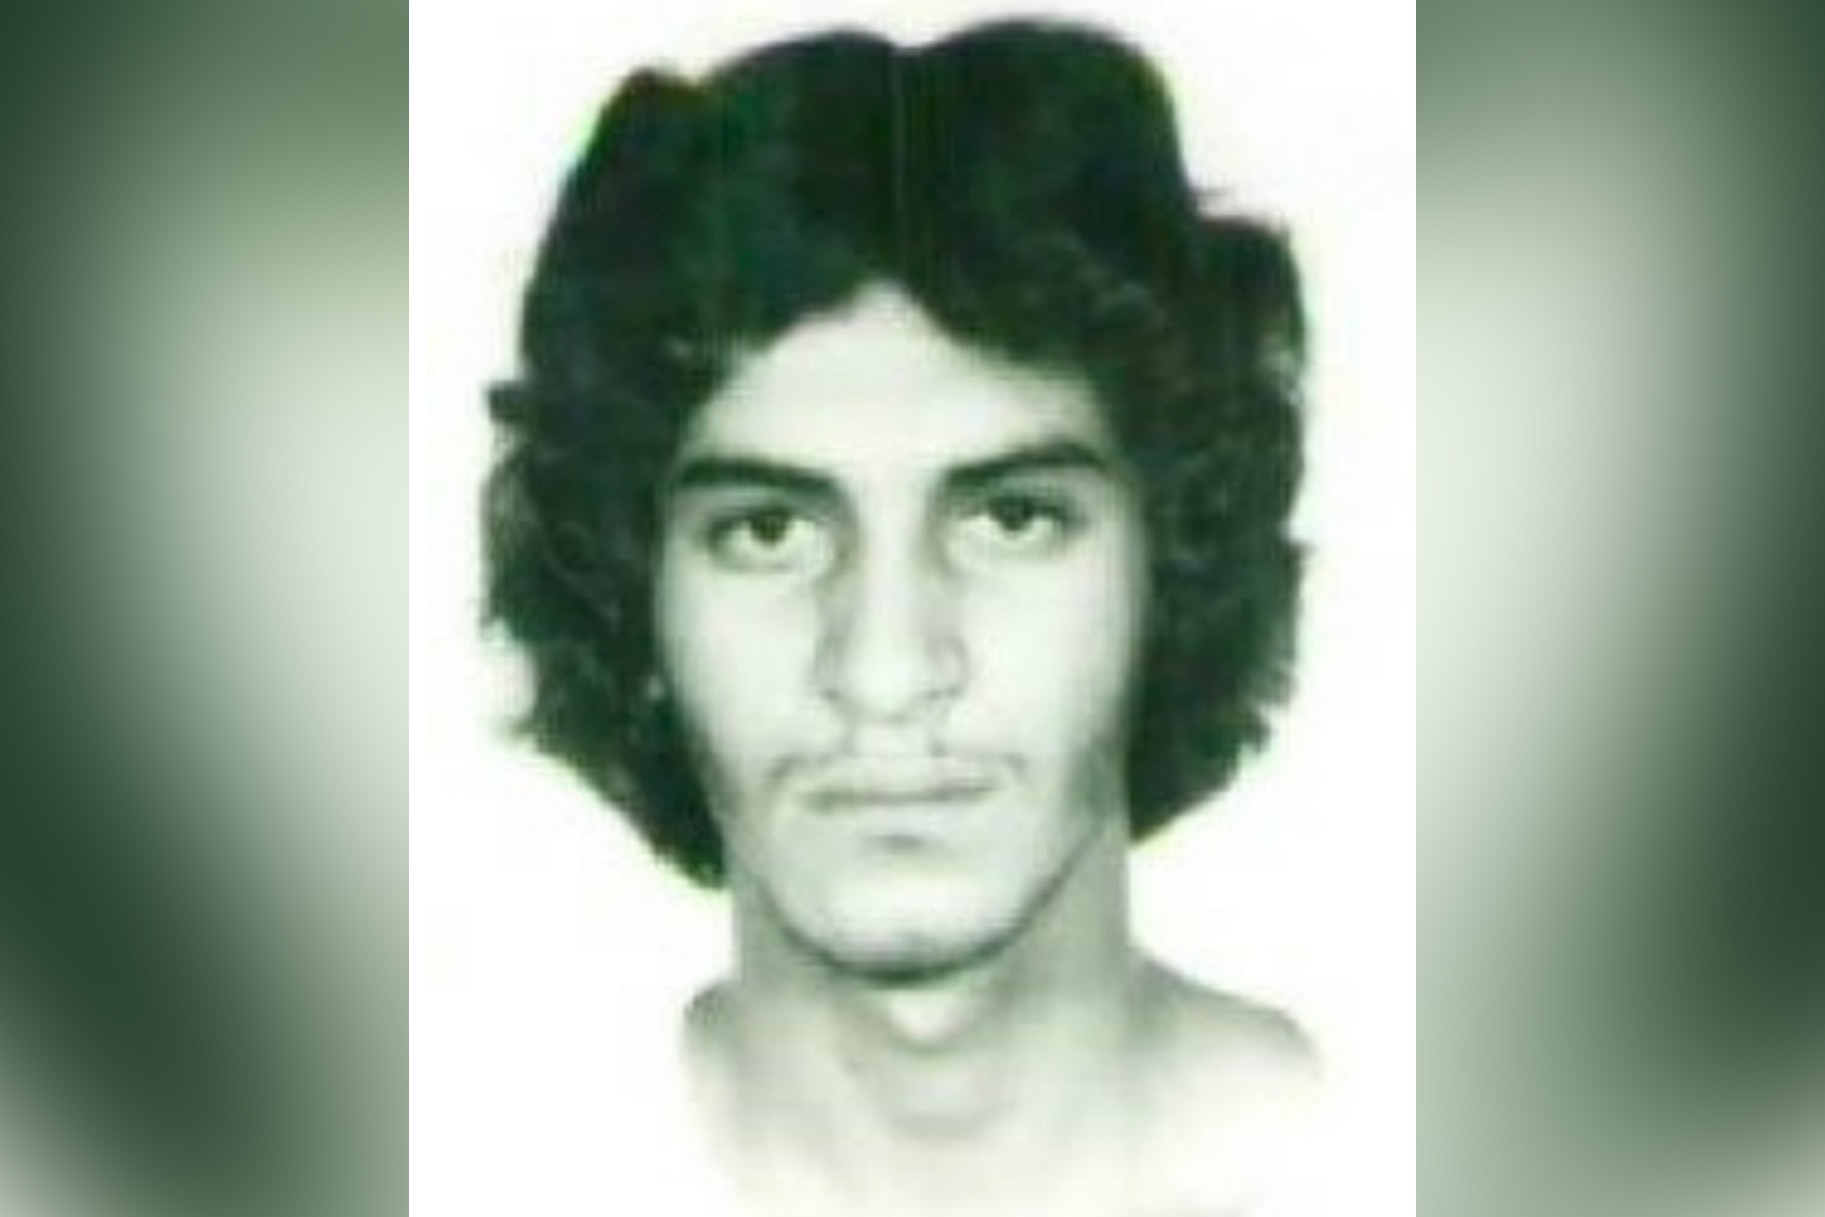 FBI photo of William Hernando Usma Acosta